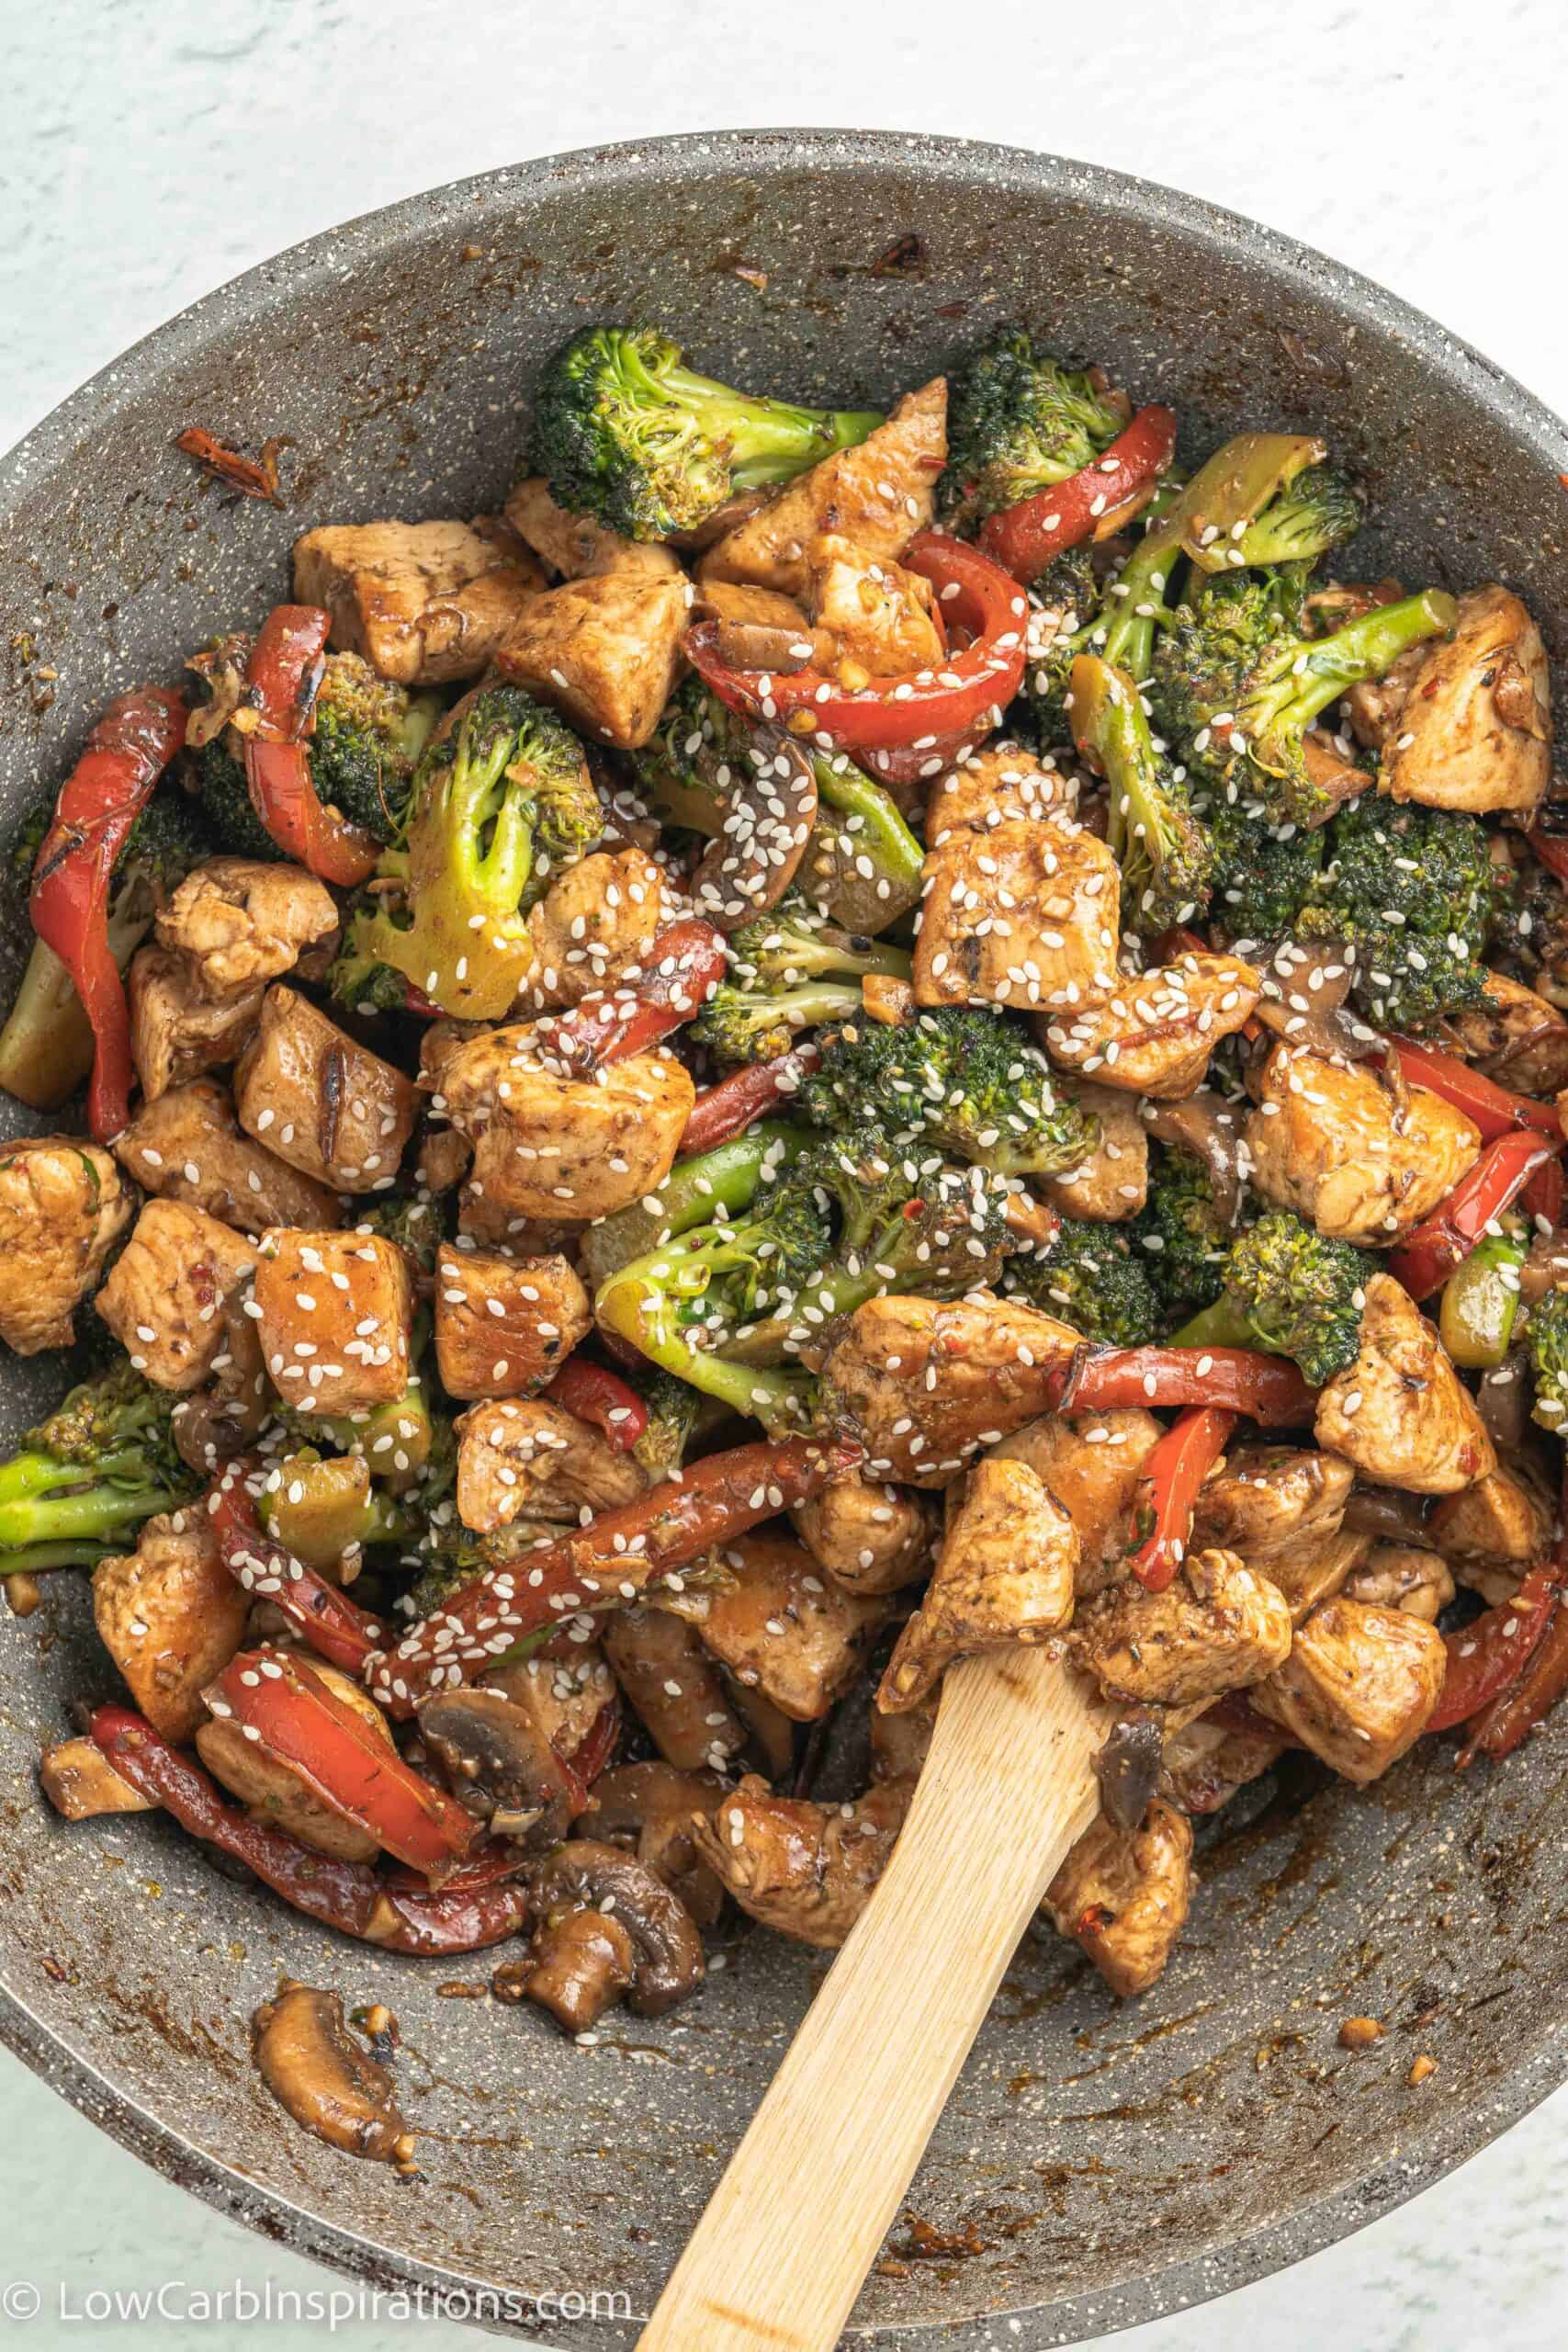 Healthy Chicken Broccoli Stir Fry: Low Carb and Keto-Friendly